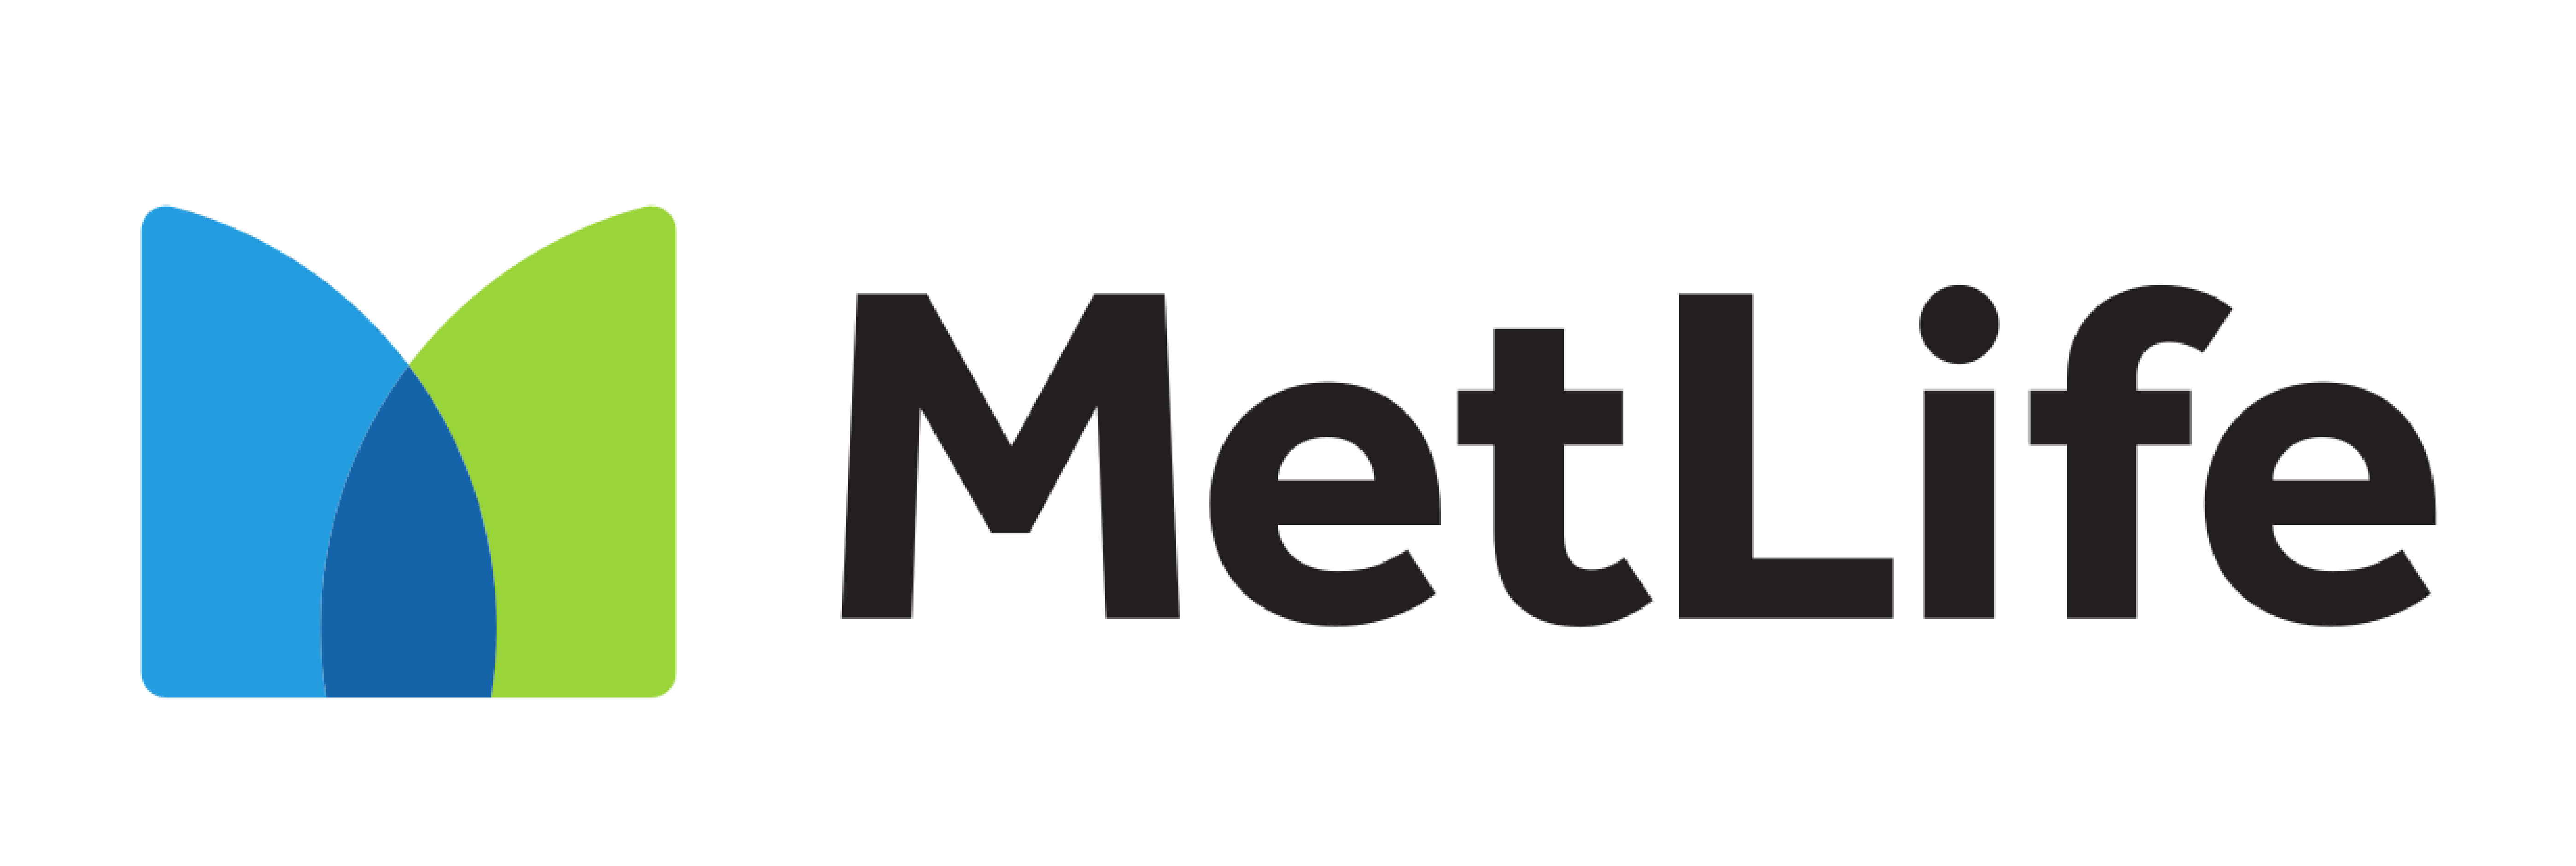 ed-MetLife_logo-01